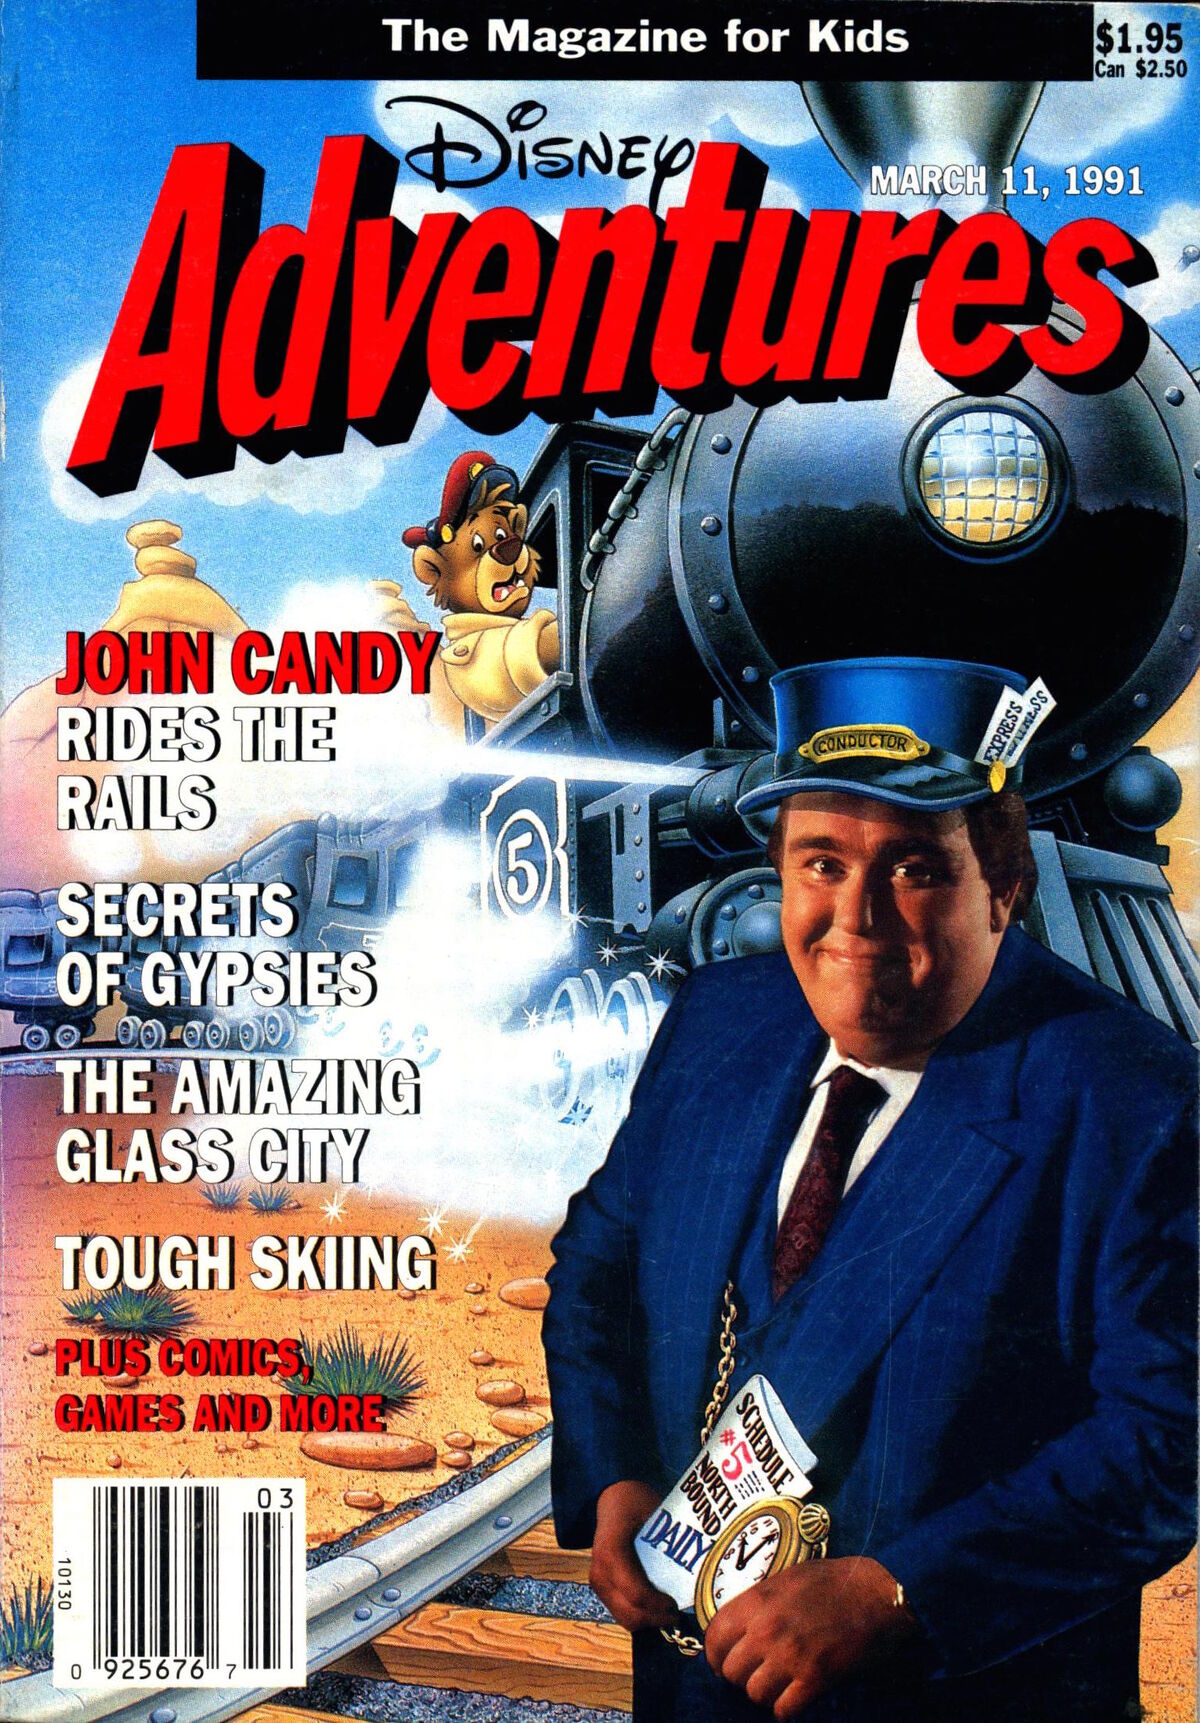 Adventures magazine